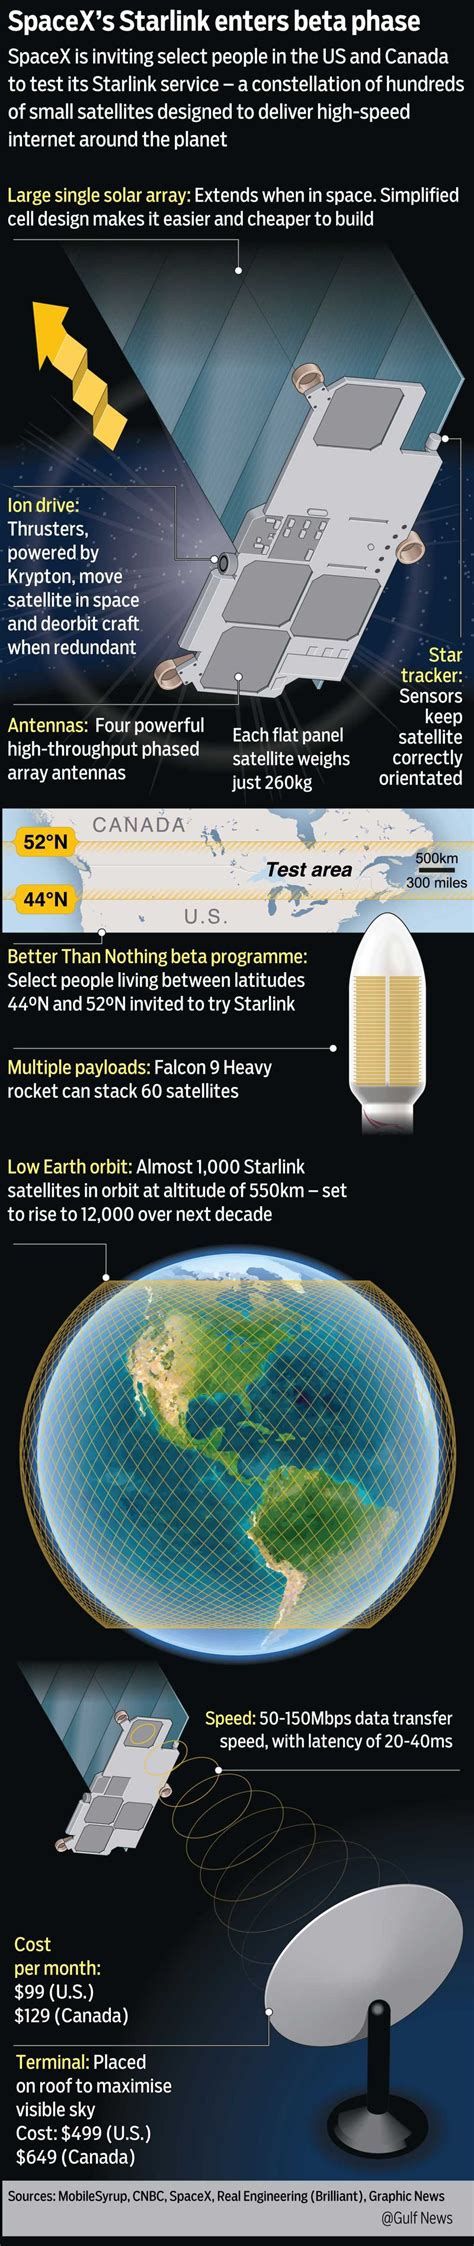 Elon Musk’s Starlink internet satellites begin beta testing | Technology – Gulf News